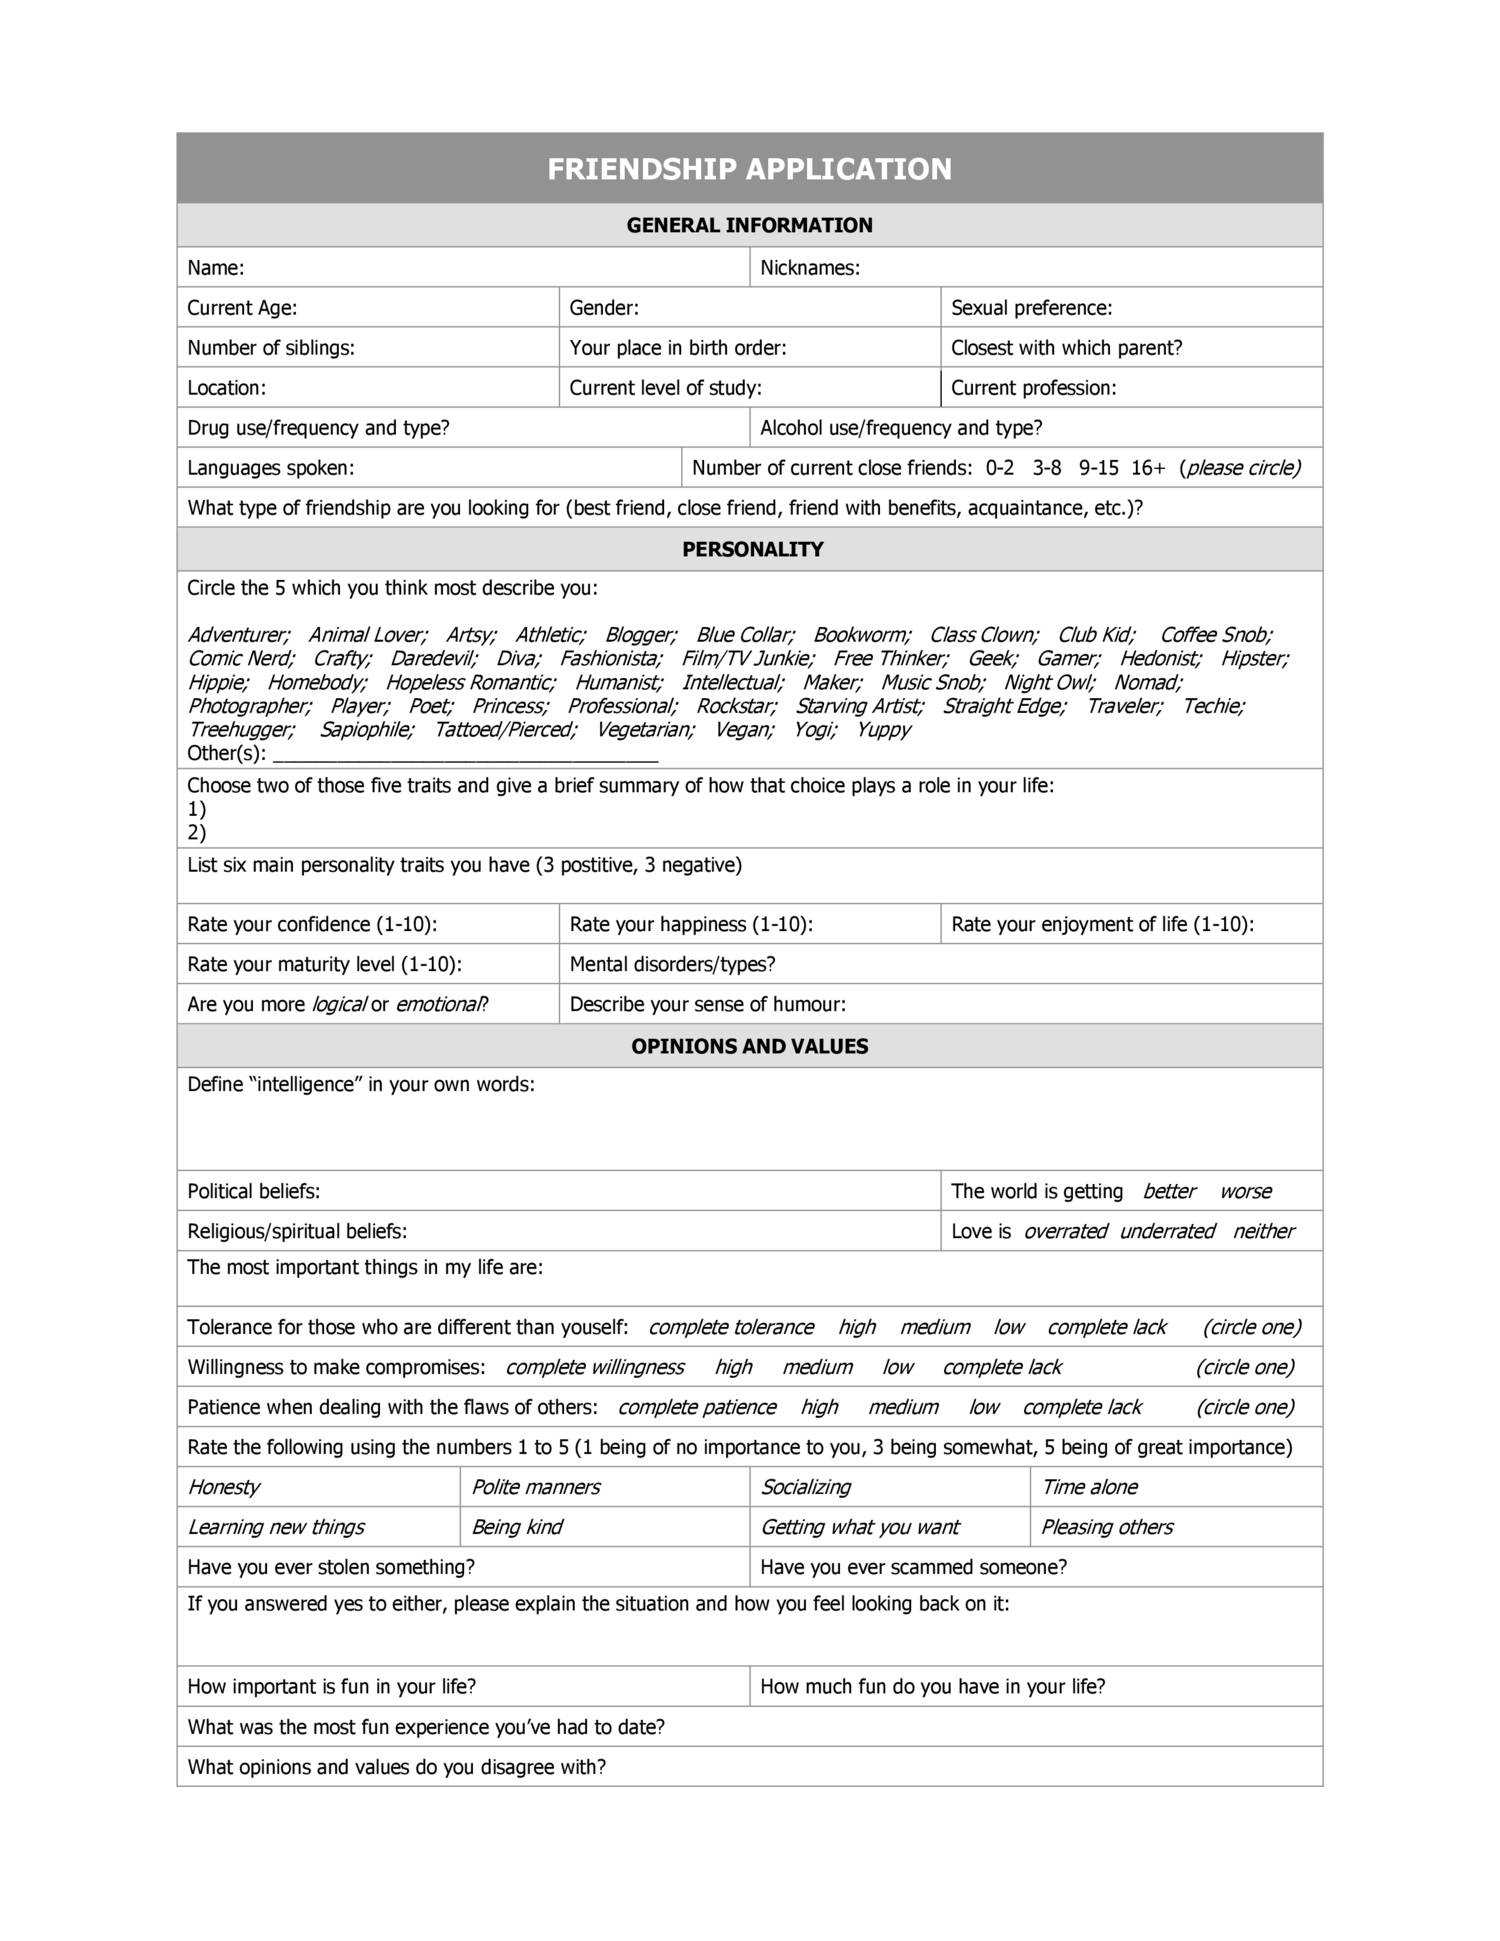 Friendship application form.pdf DocDroid